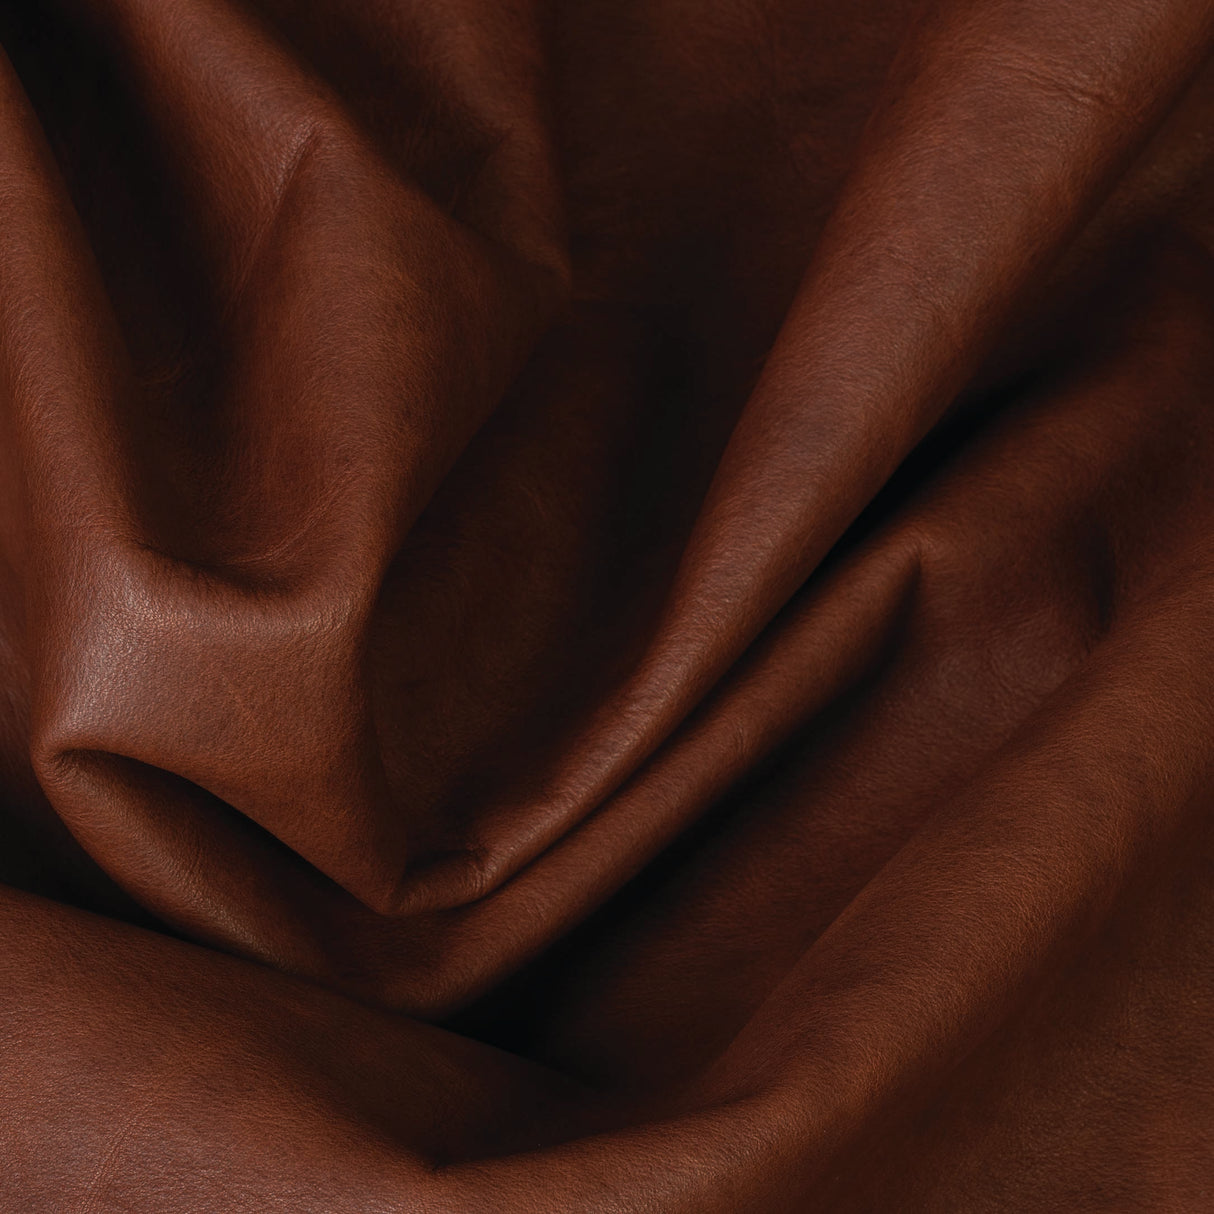 Hermann Oak® Heritage 1881 Top Grain Leather, 4 to 5 oz.